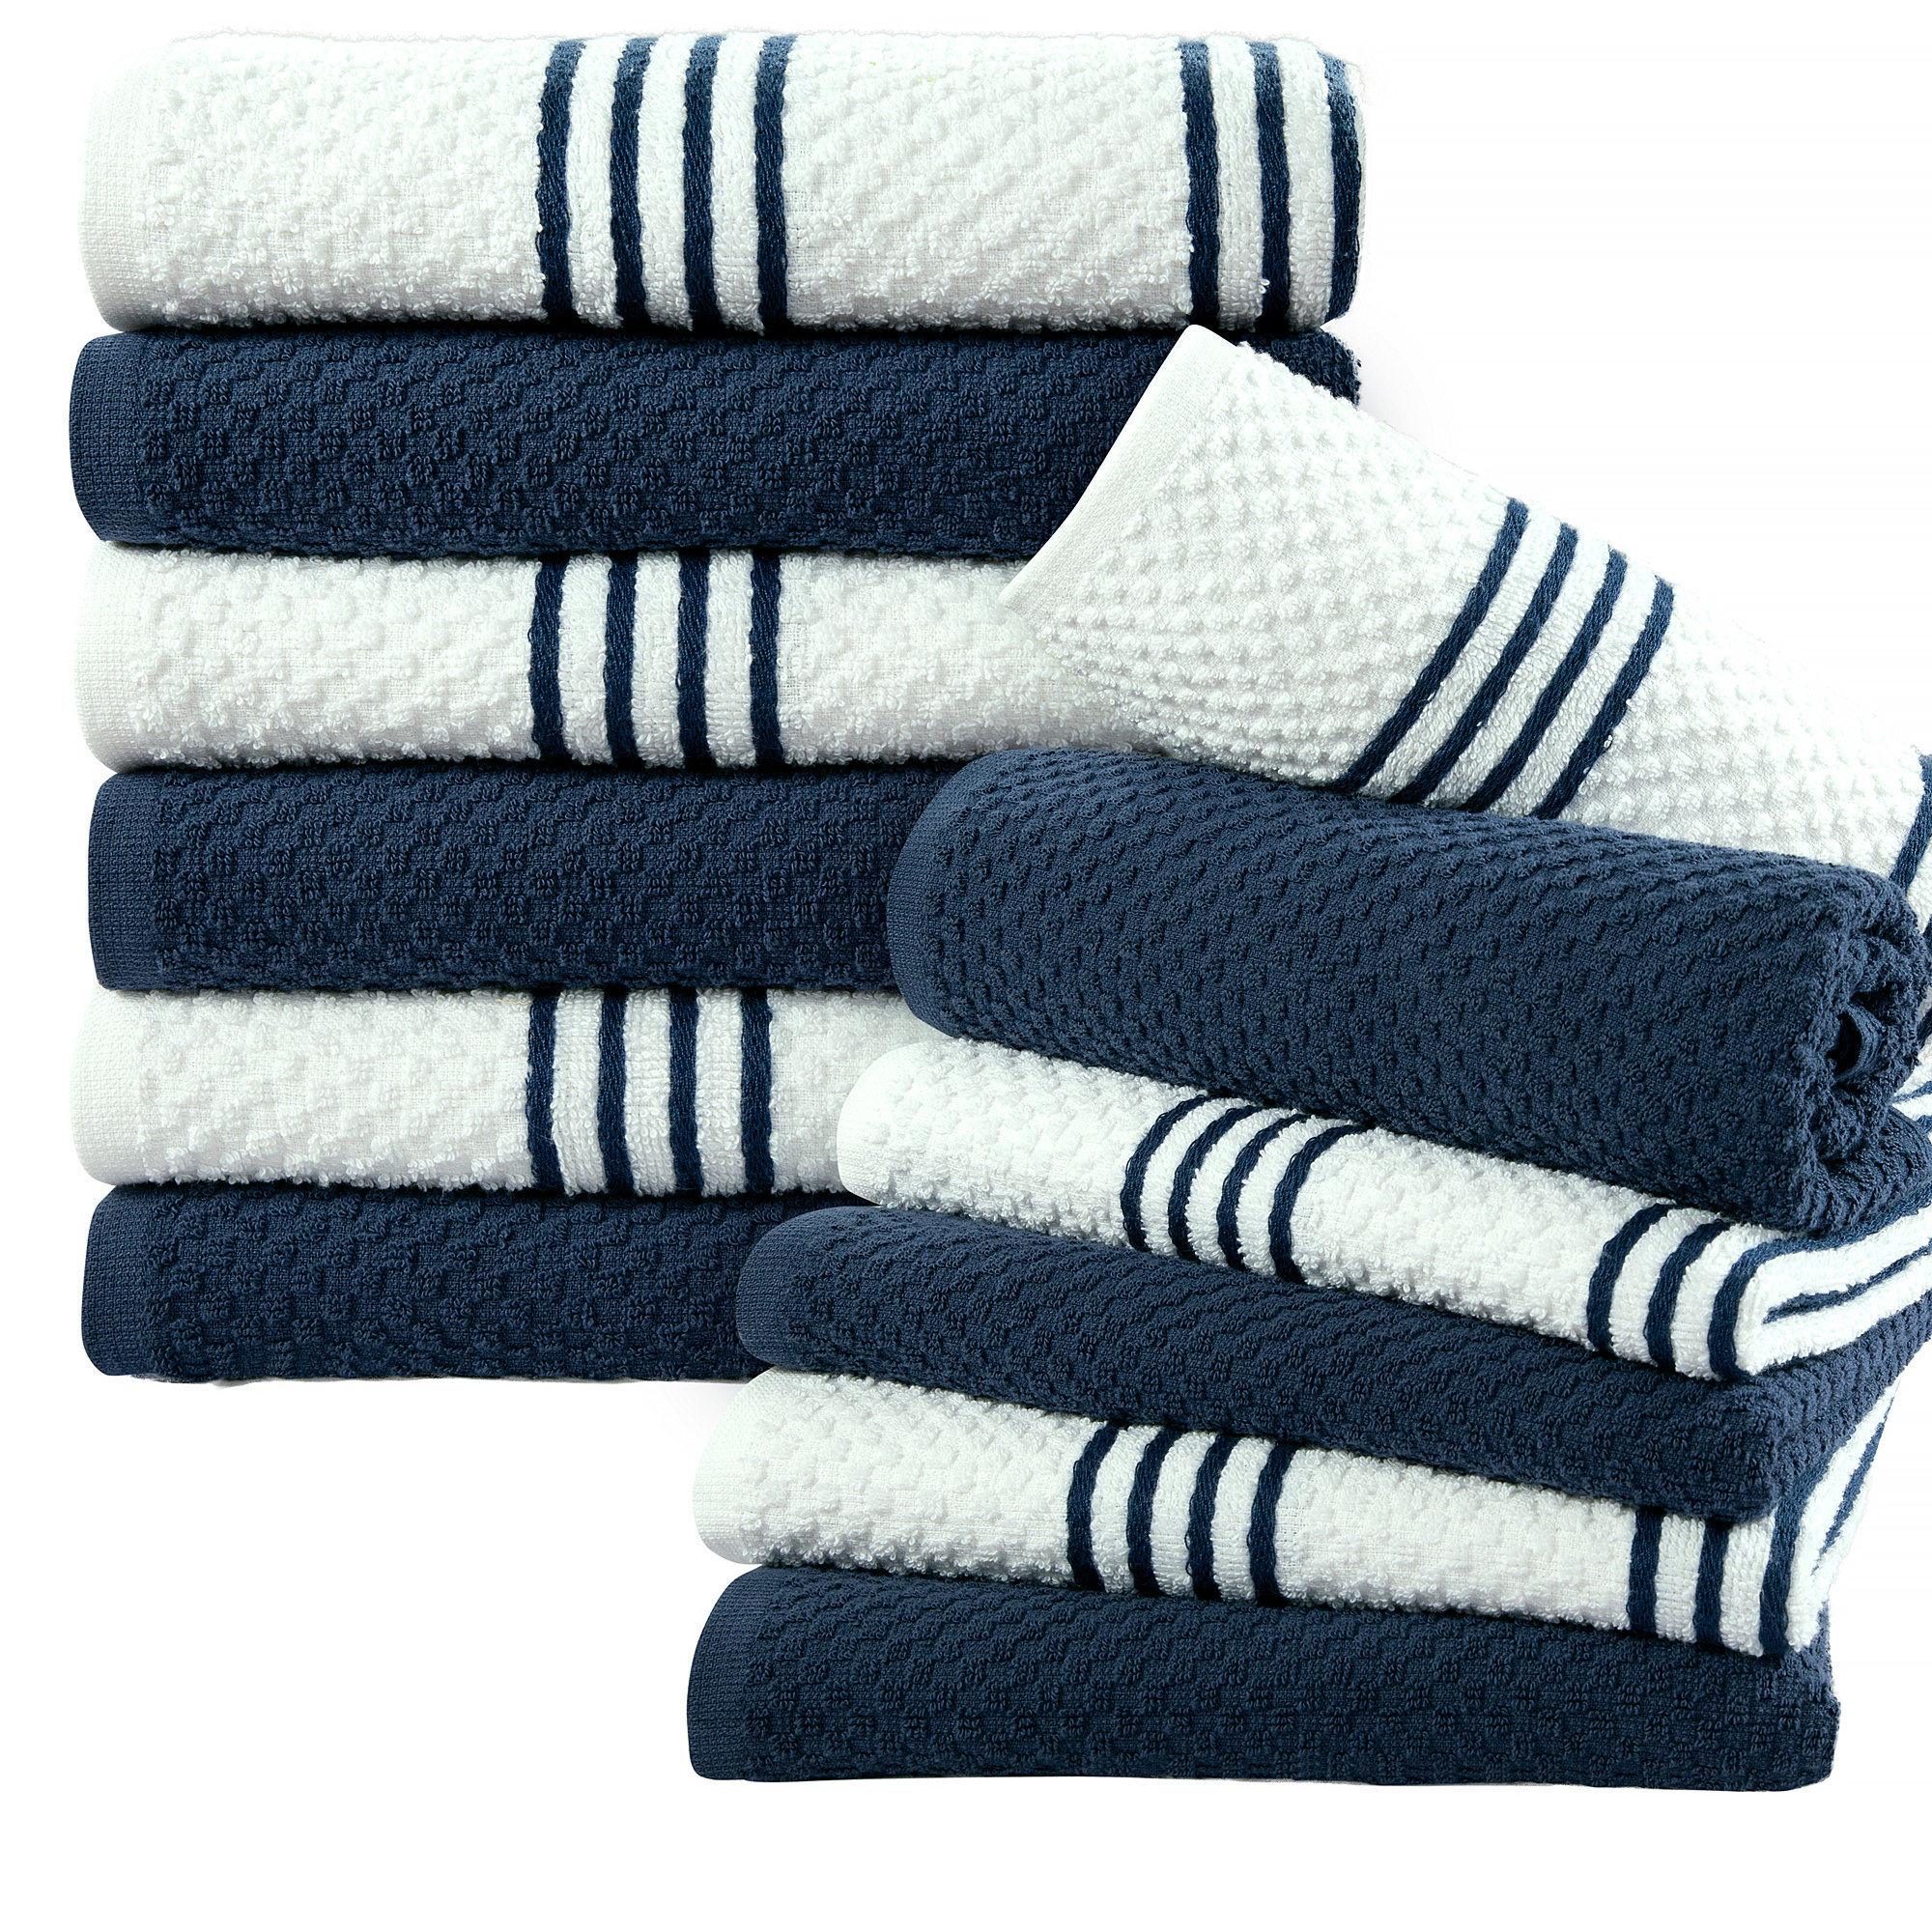 Bar Mop Cleaning Kitchen Dish Cloth Towels,100% Cotton, Machine Washable,  Everyday Kitchen Basic Utility Bar Mop Dishcloth Set of 12, White